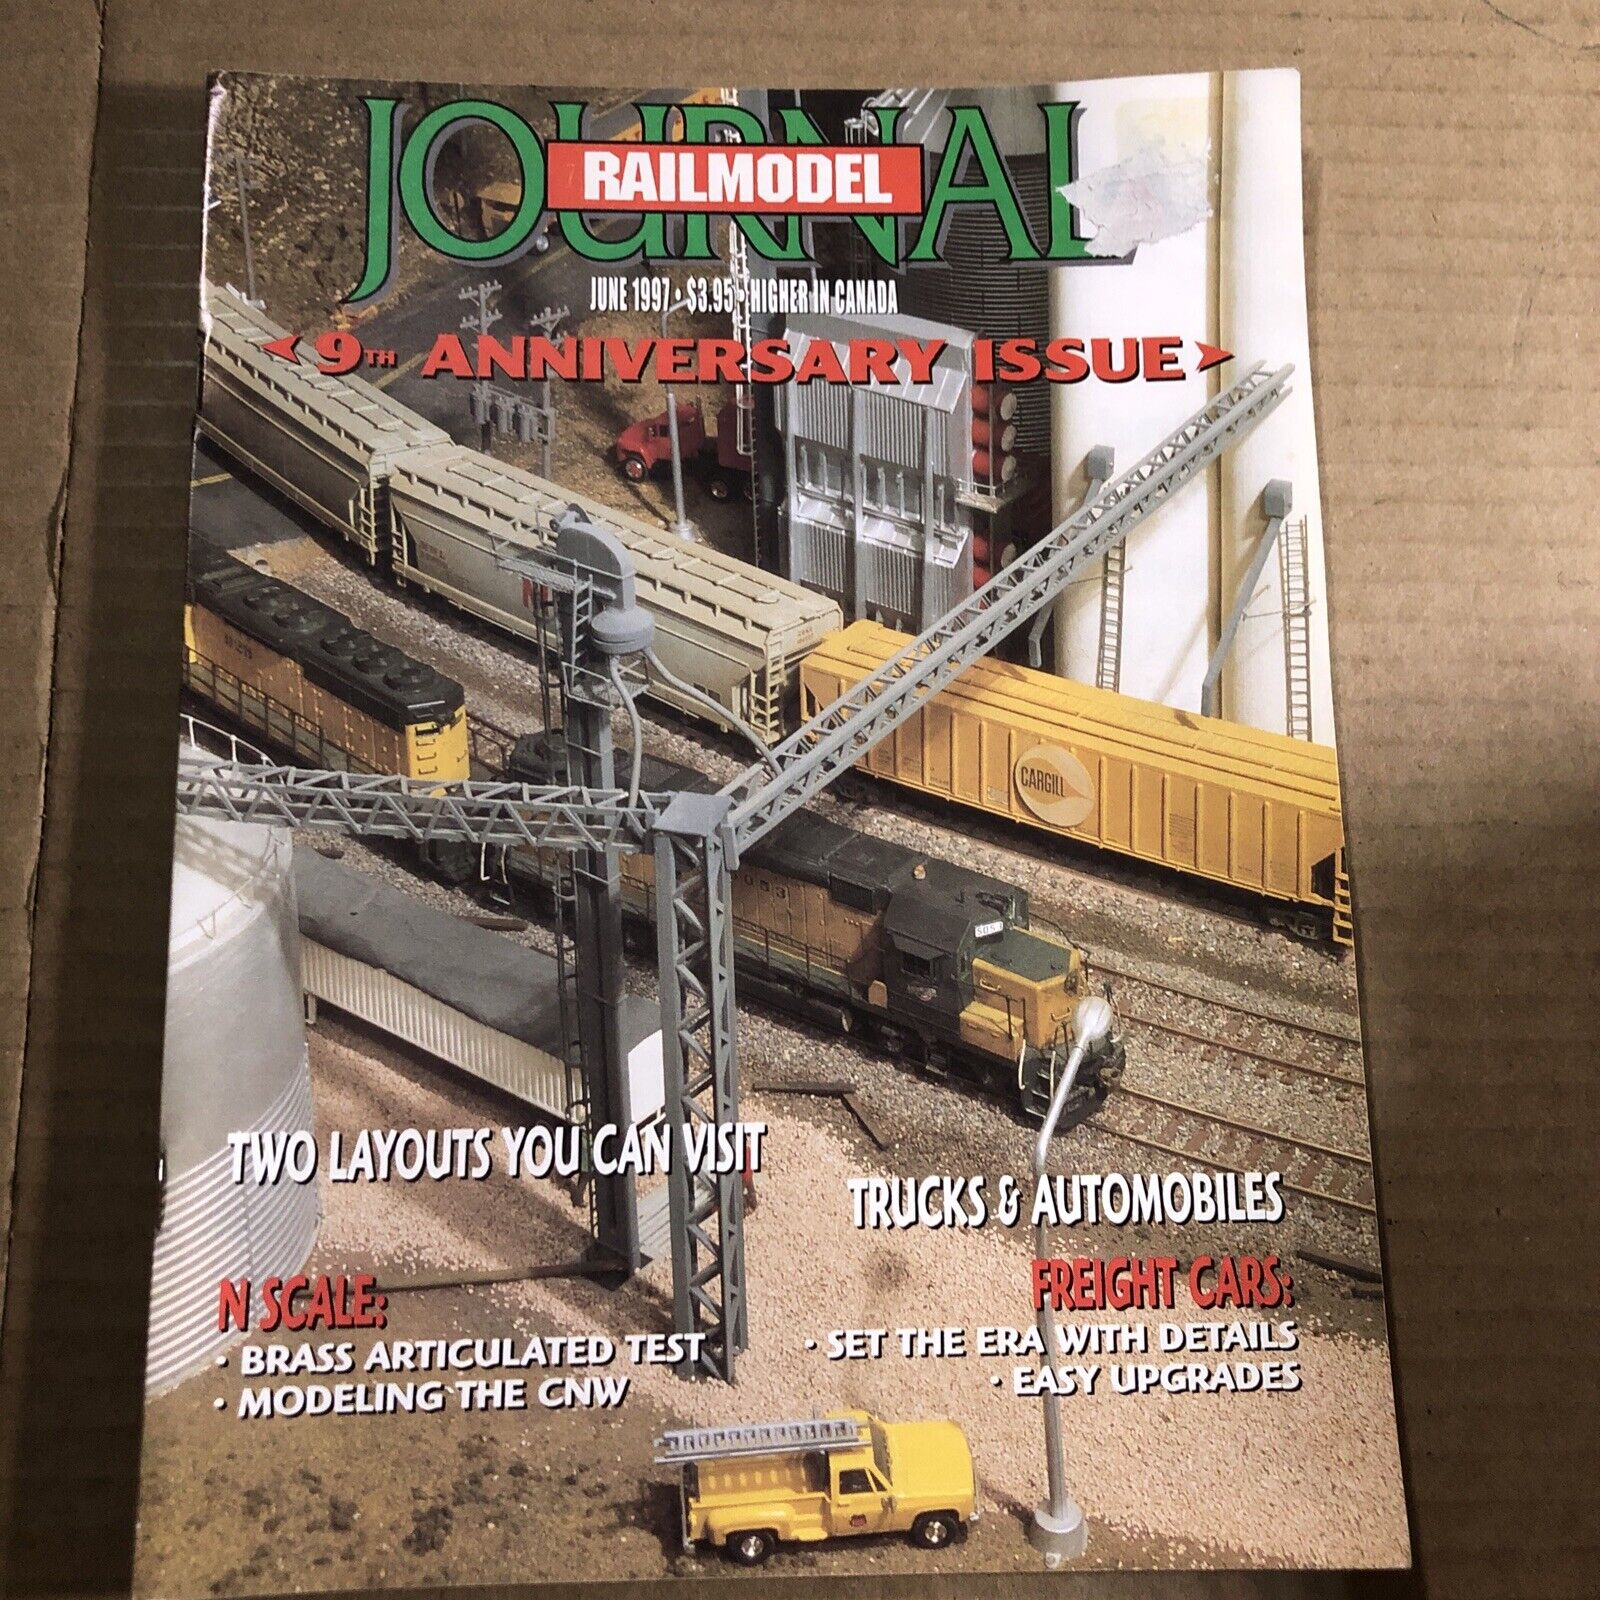 Railmodel Journal 1997 June 9th Anniversary Issue Trucks & Automobiles